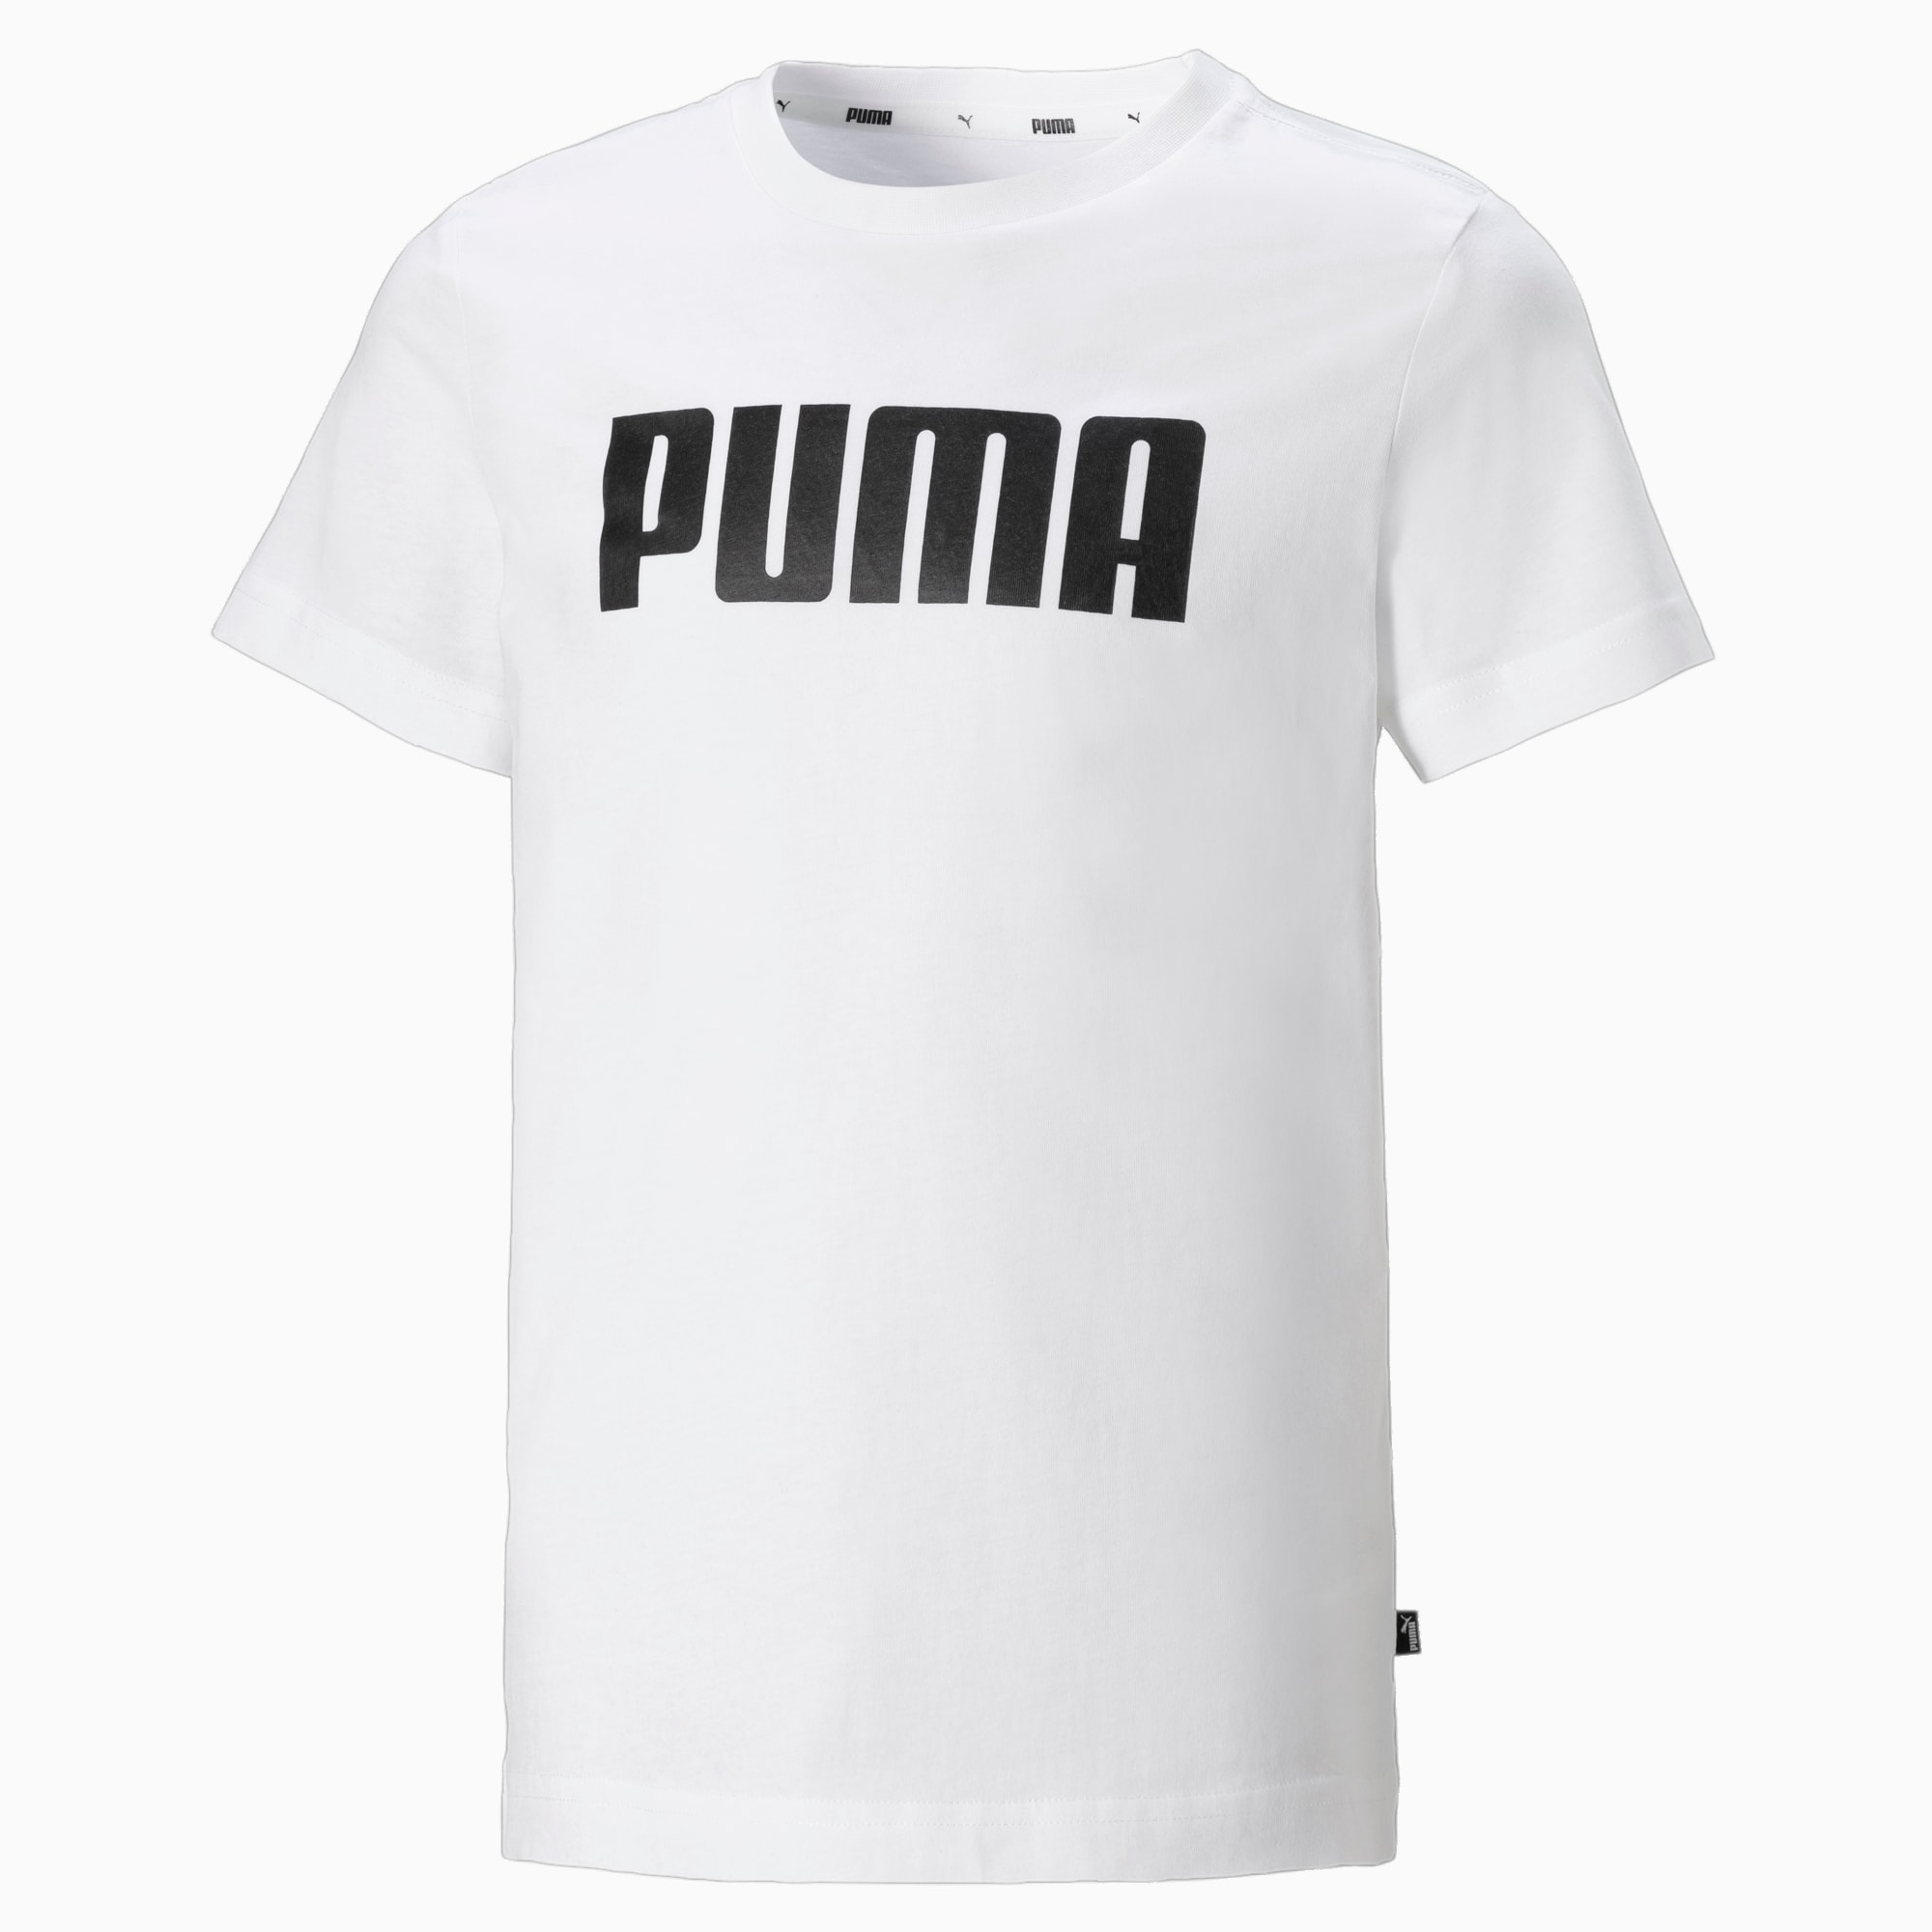 Tee | Puma White | PUMA Shoes | PUMA